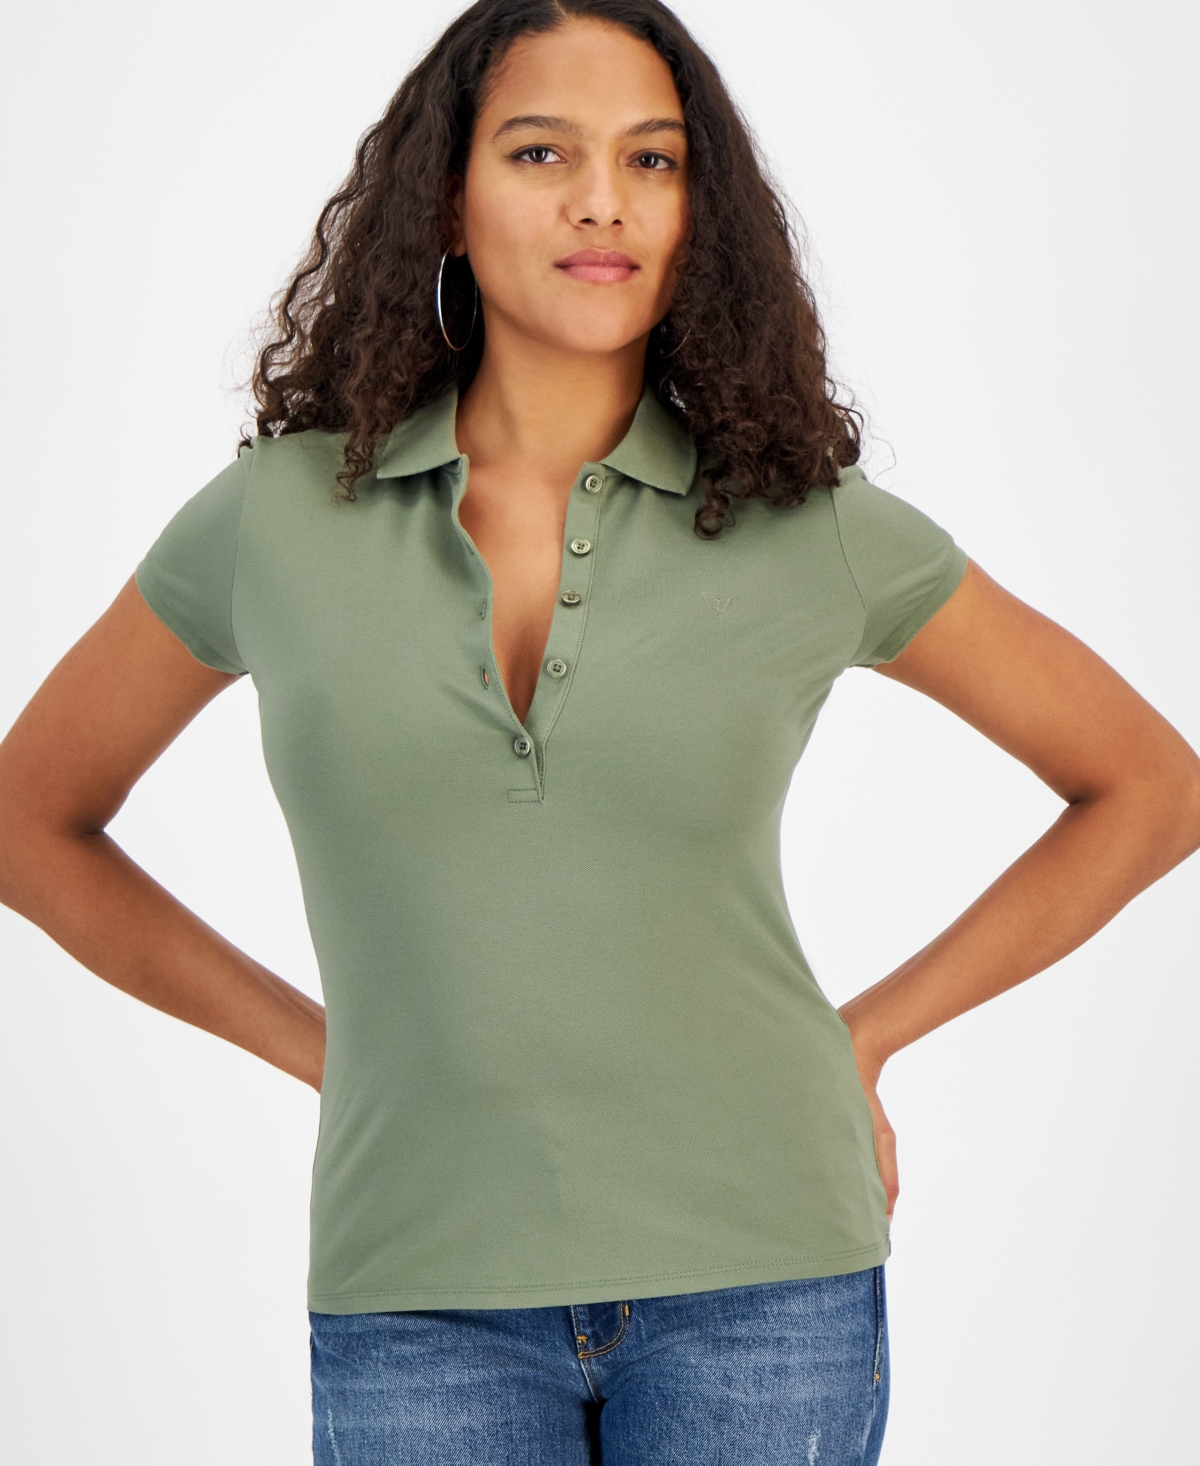 Women's Short-Sleeve Polo Shirt - Lichen Leaf Green